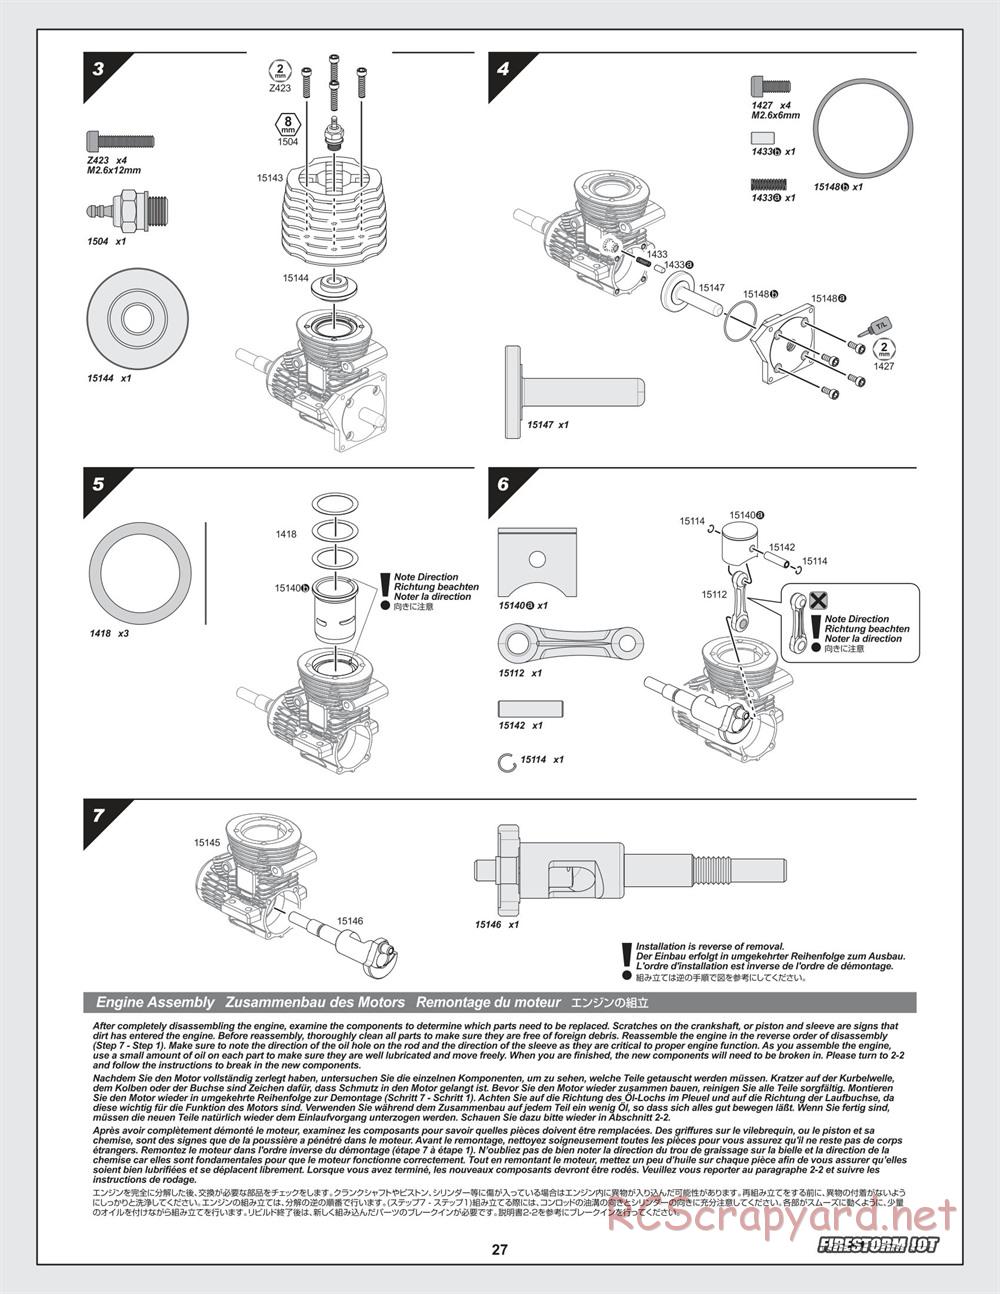 HPI - Firestorm 10T - Manual - Page 27